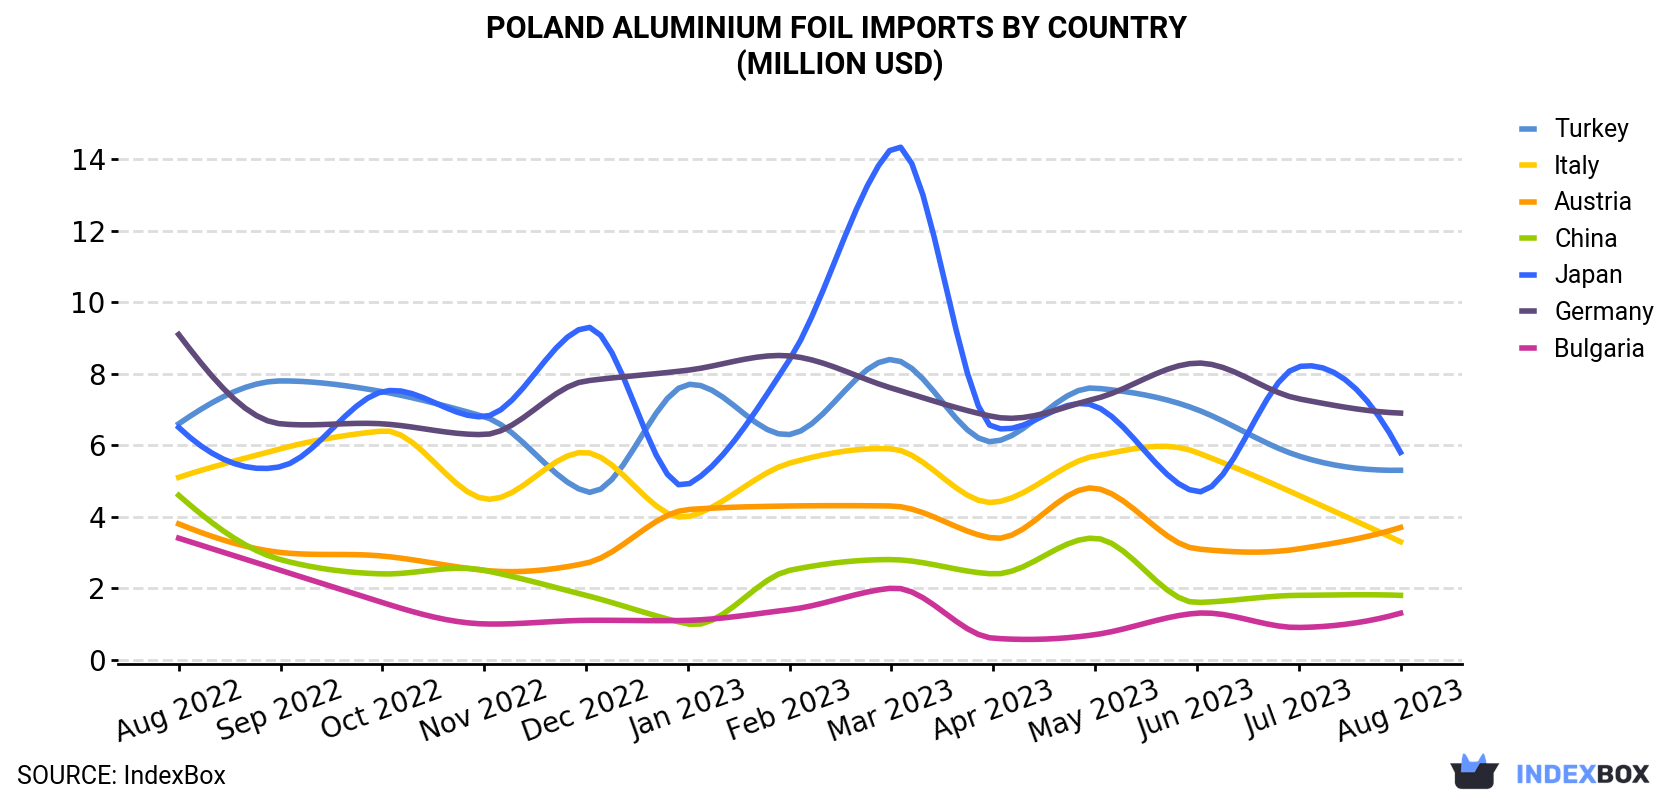 Poland Aluminium Foil Imports By Country (Million USD)